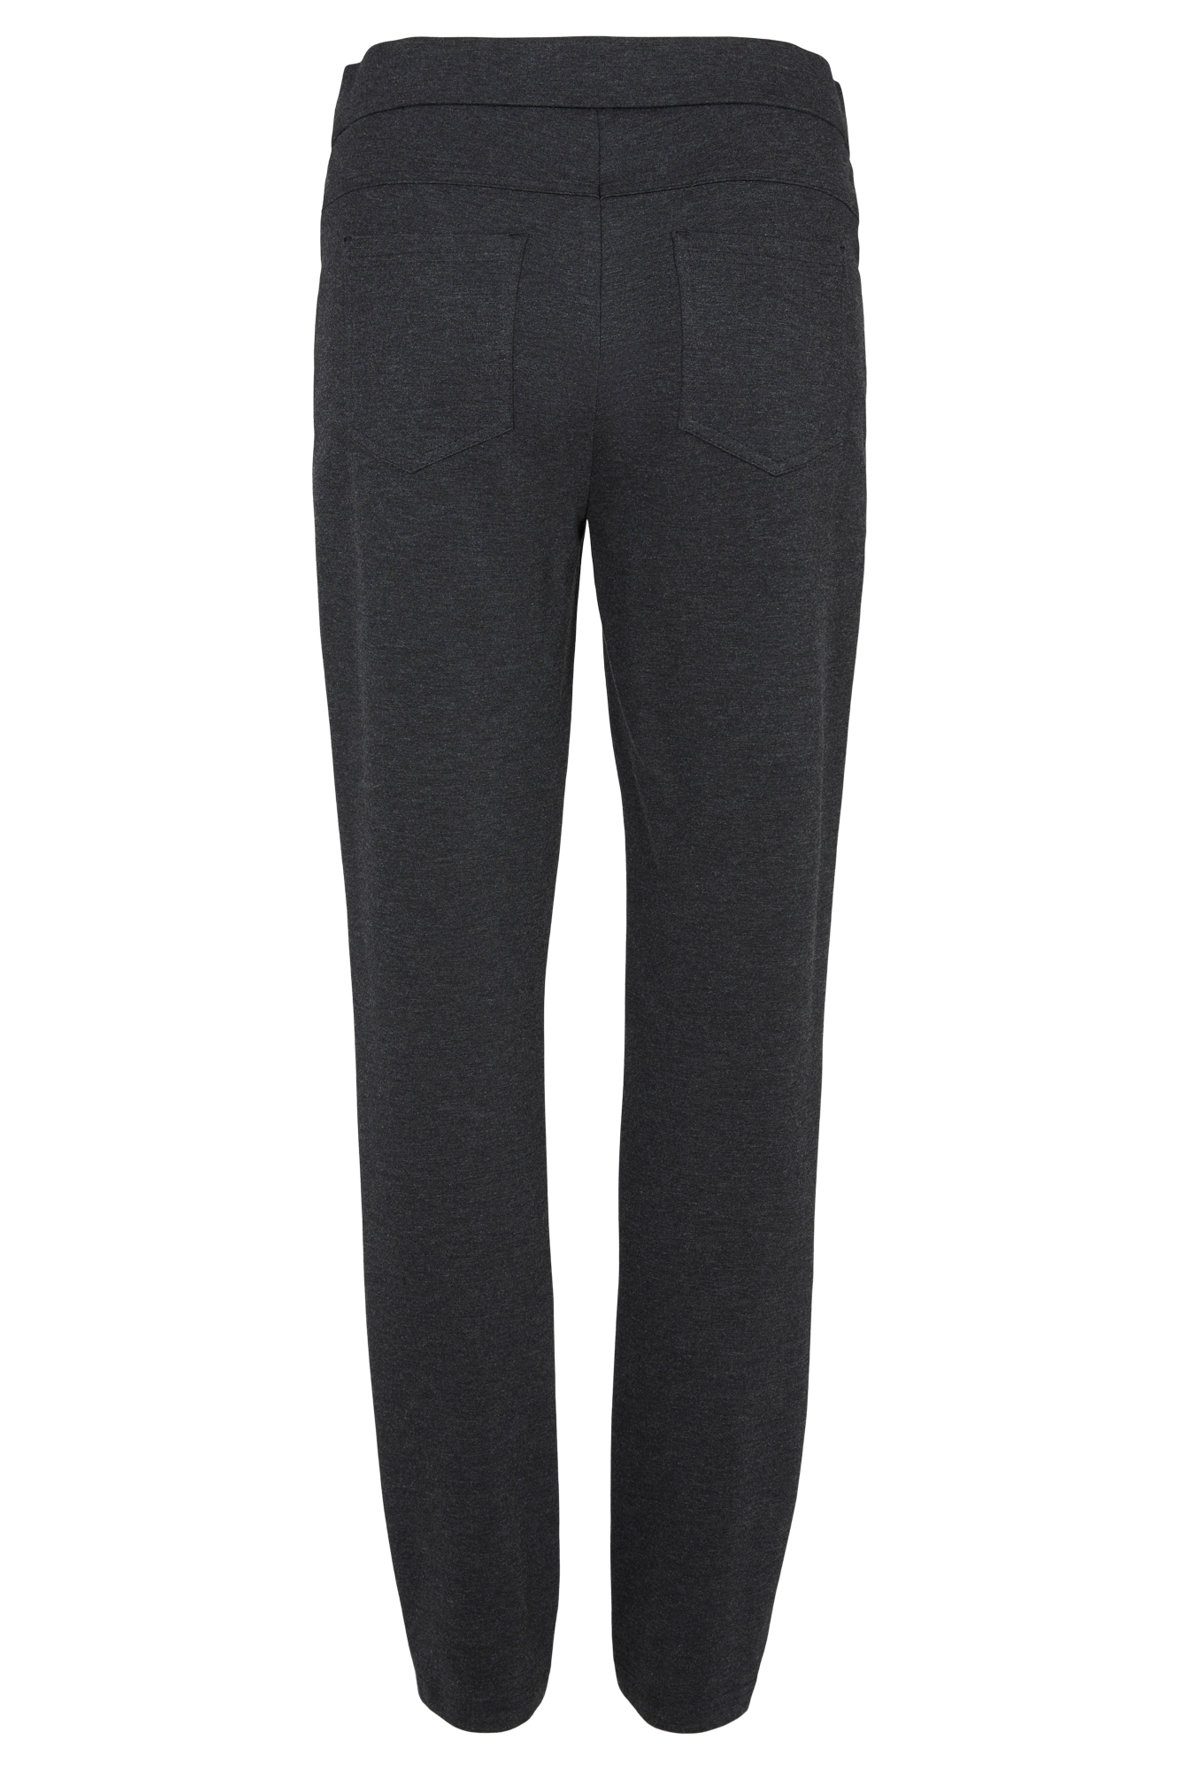 Robell bukser i Jersey kvalitet med super - mørkegrå melang - Hos Lohse